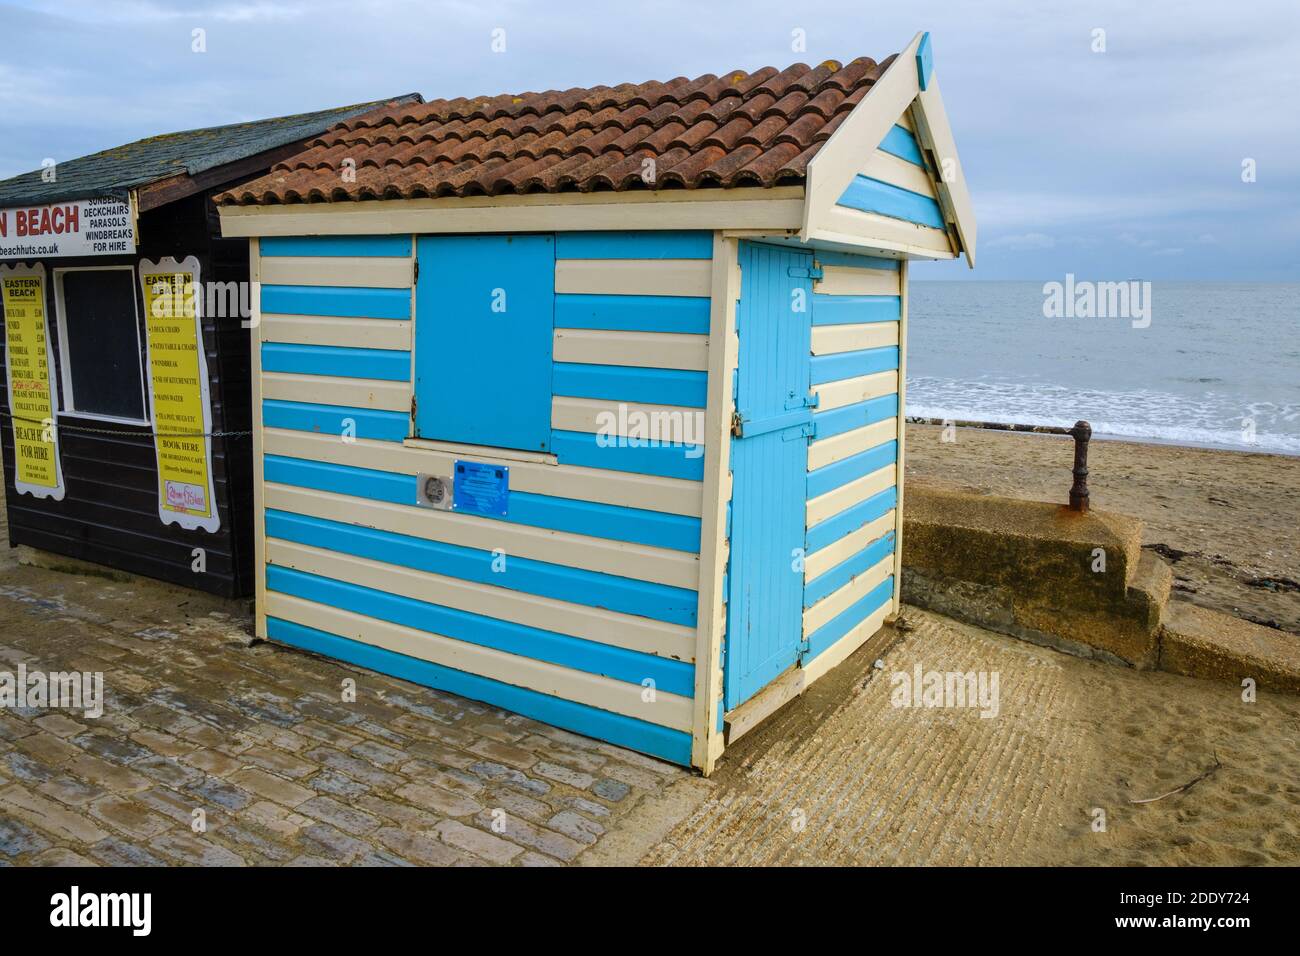 Beach kiosks shut up for the winter, Sandown, Isle of Wight Stock Photo